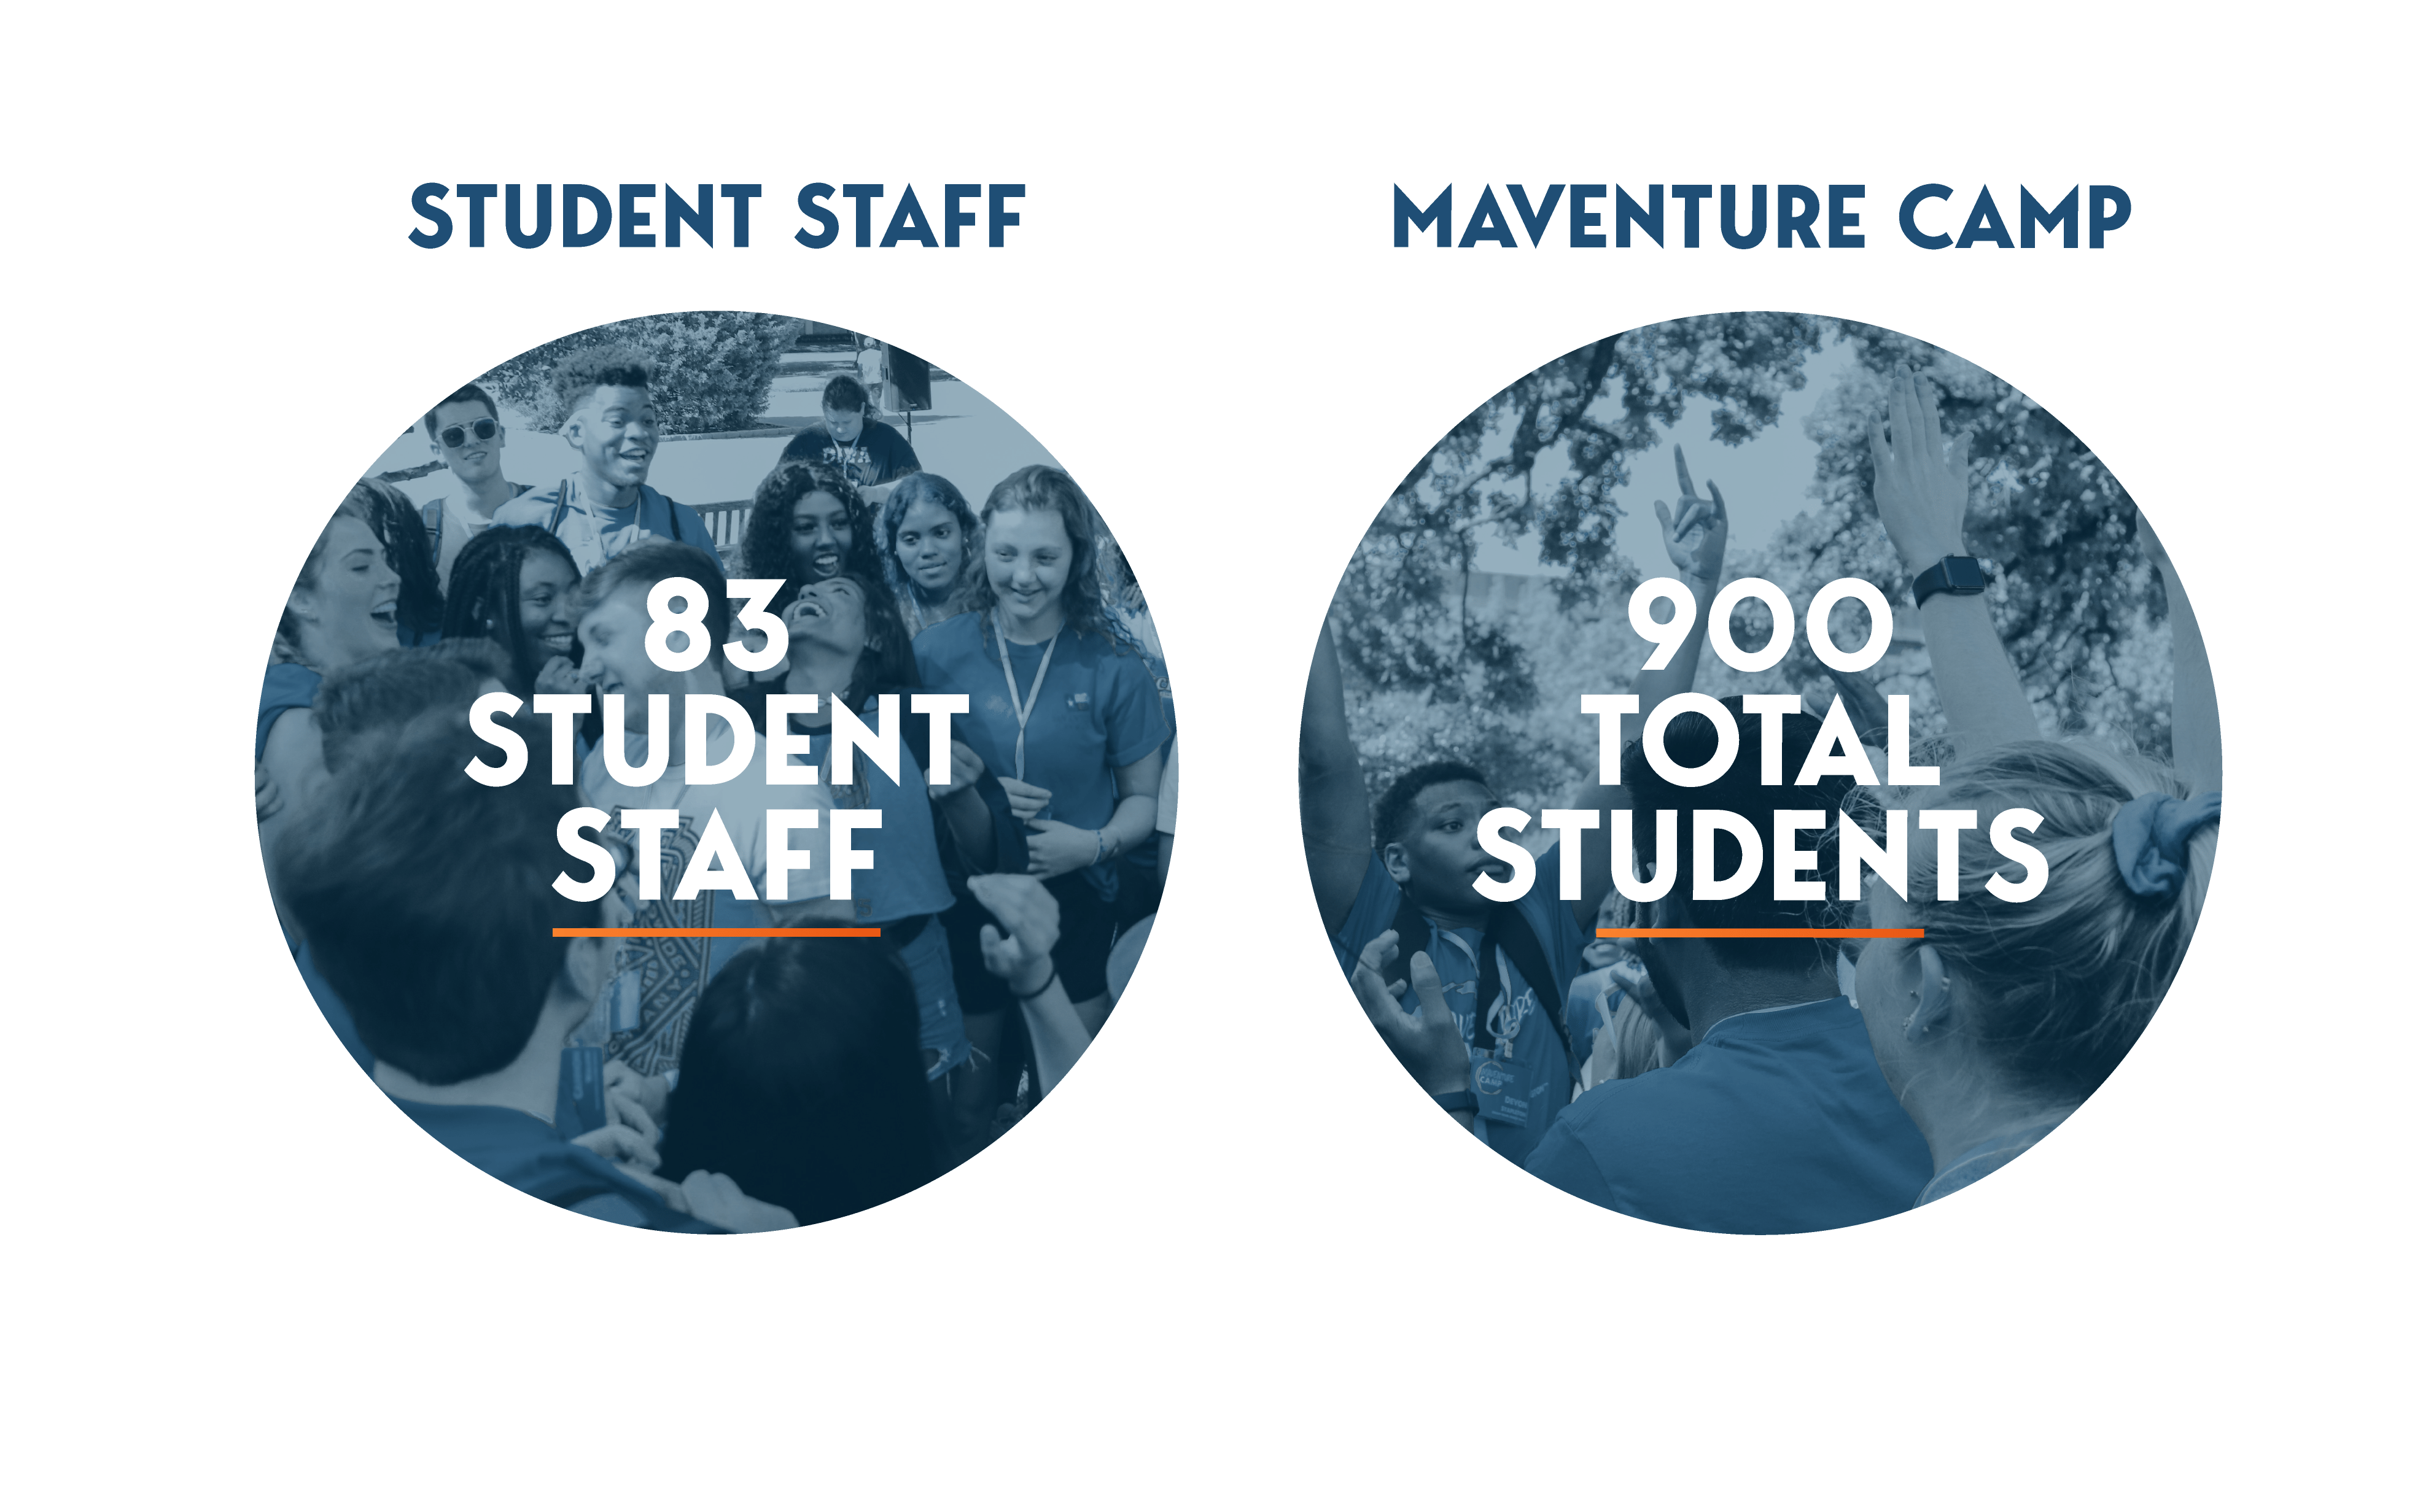 Student Staff: 83 Student Staff. Maventure Camp: 900 Total Students.